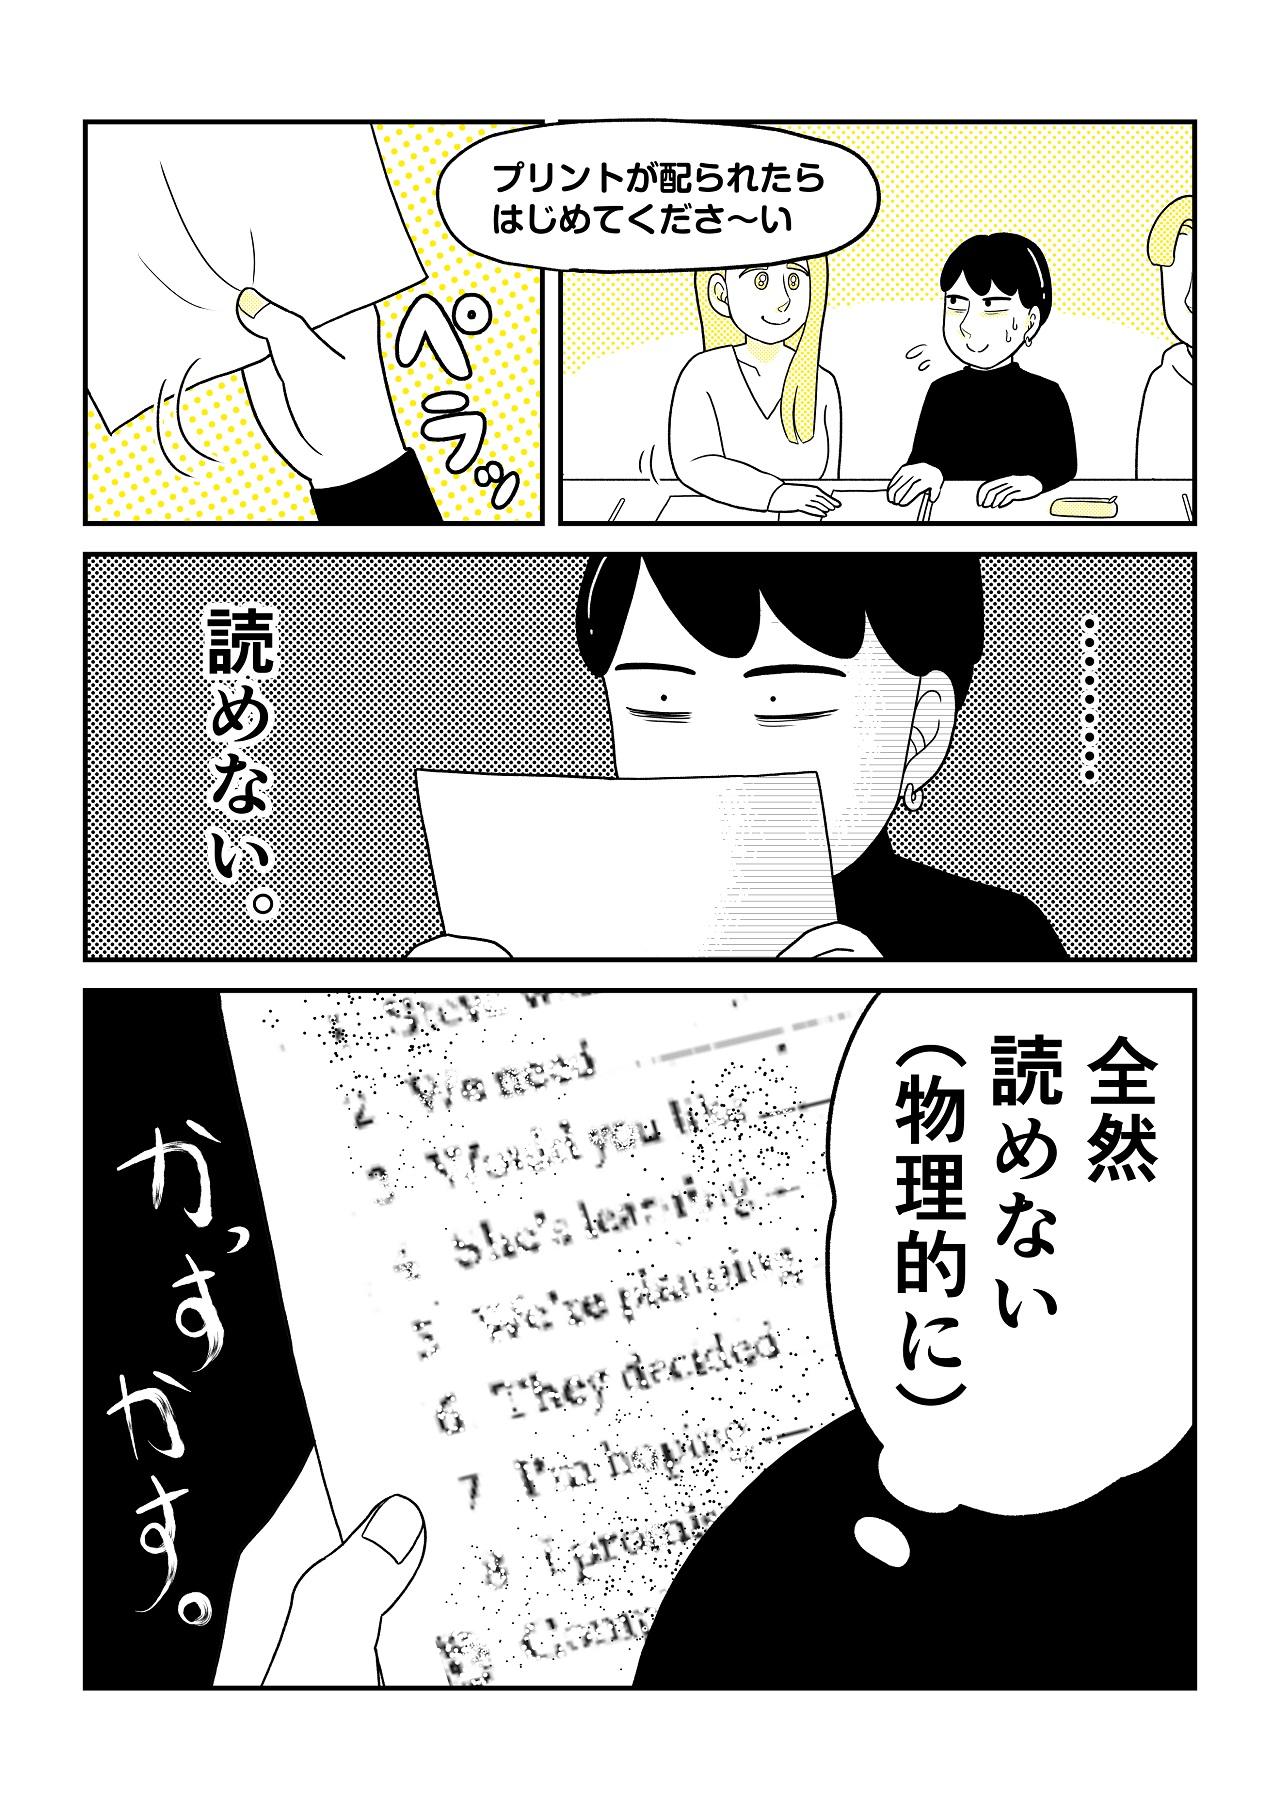 https://www.ryugaku.co.jp/column/images/06_05_1280.jpg